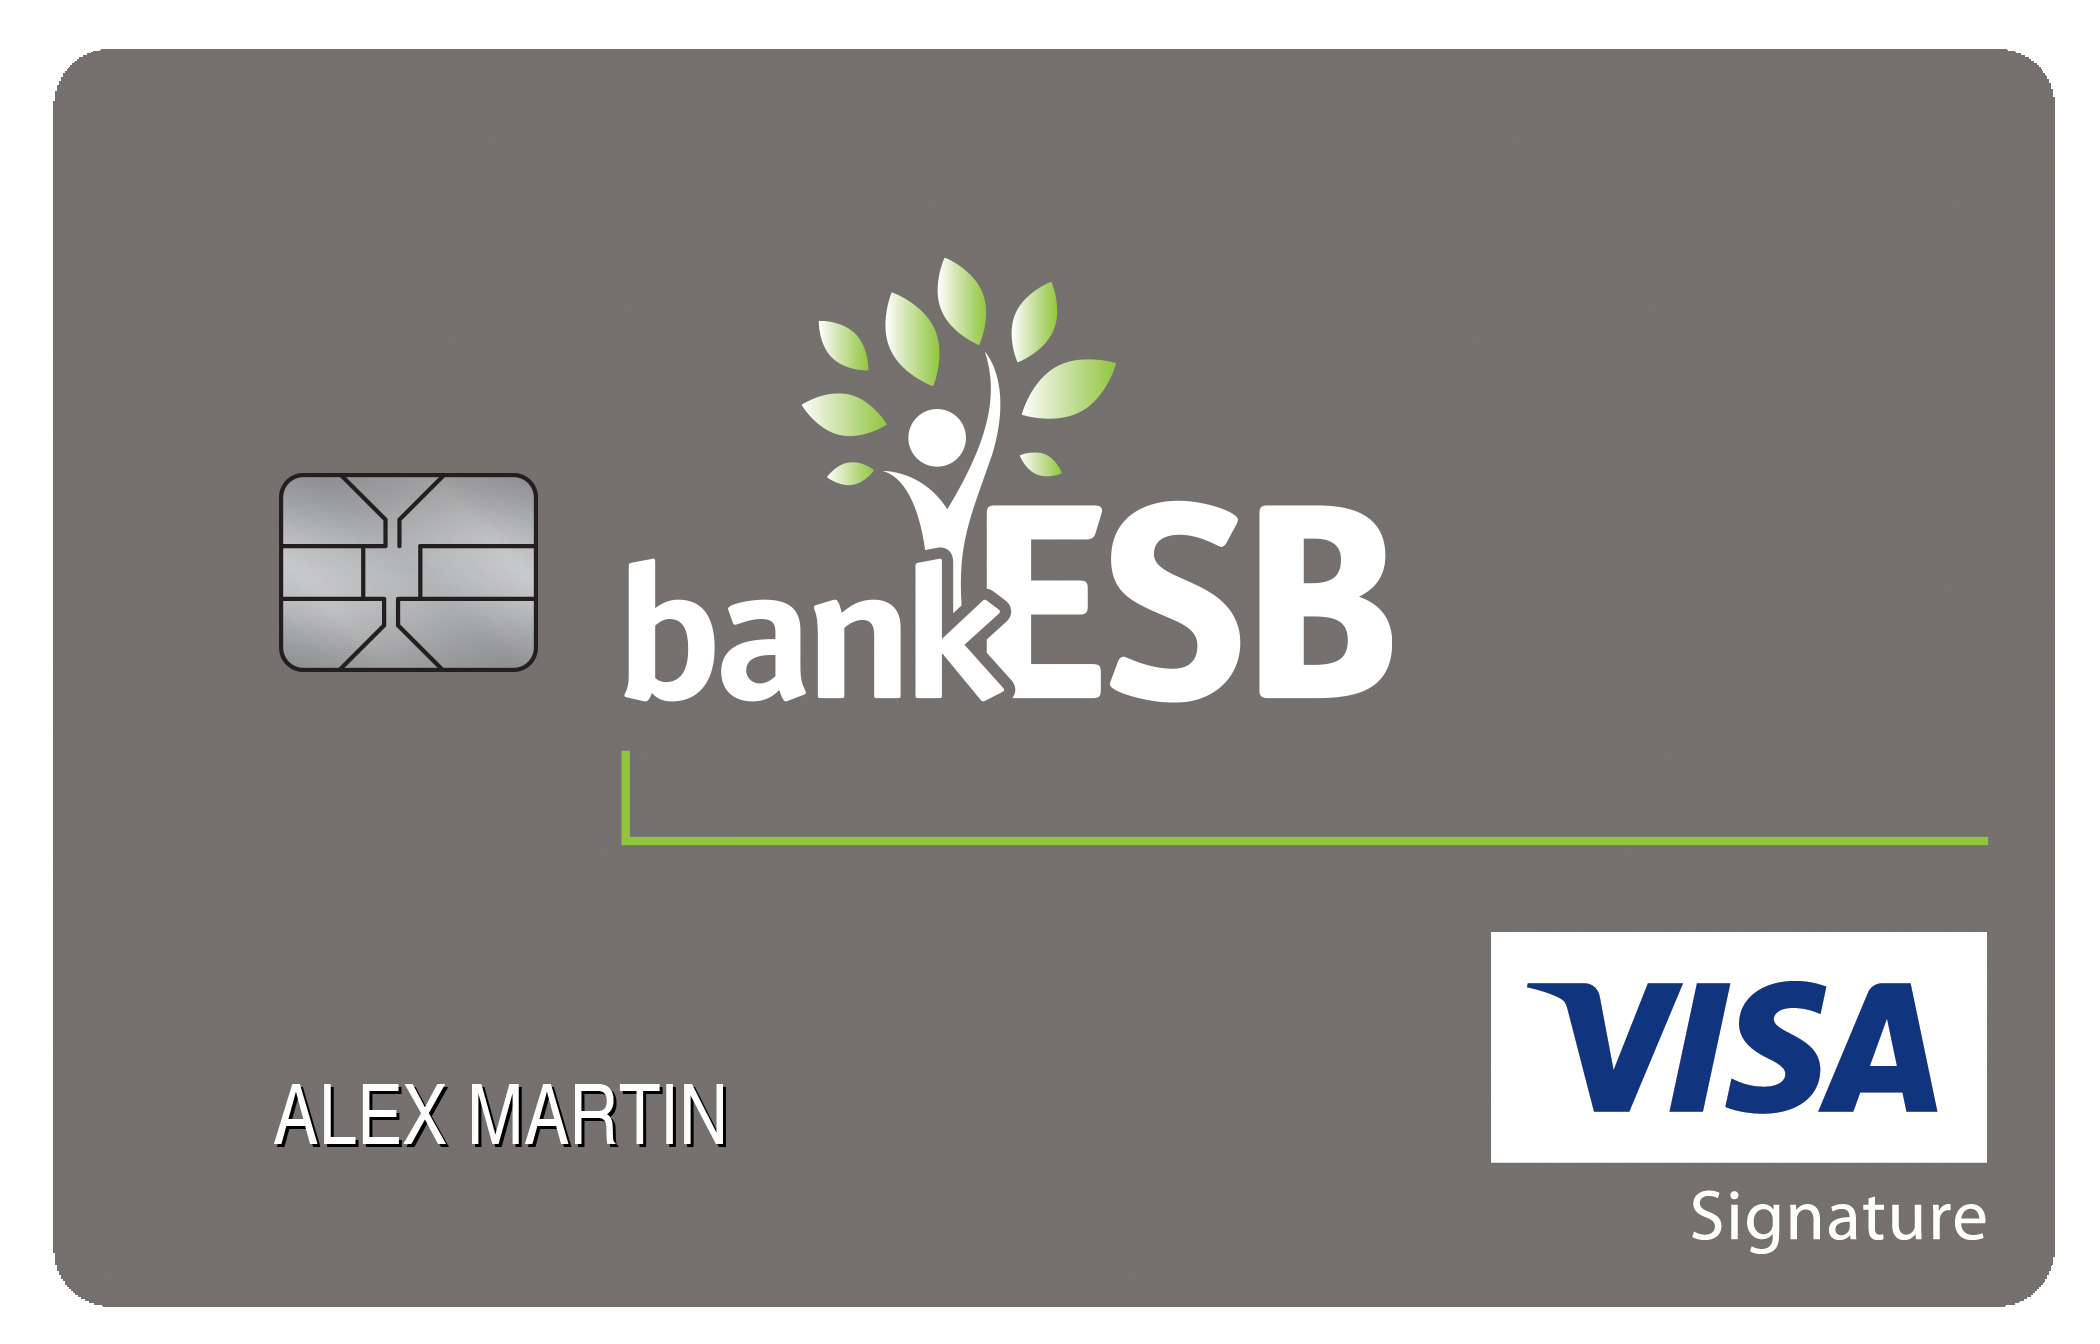 bankESB Travel Rewards+ Card